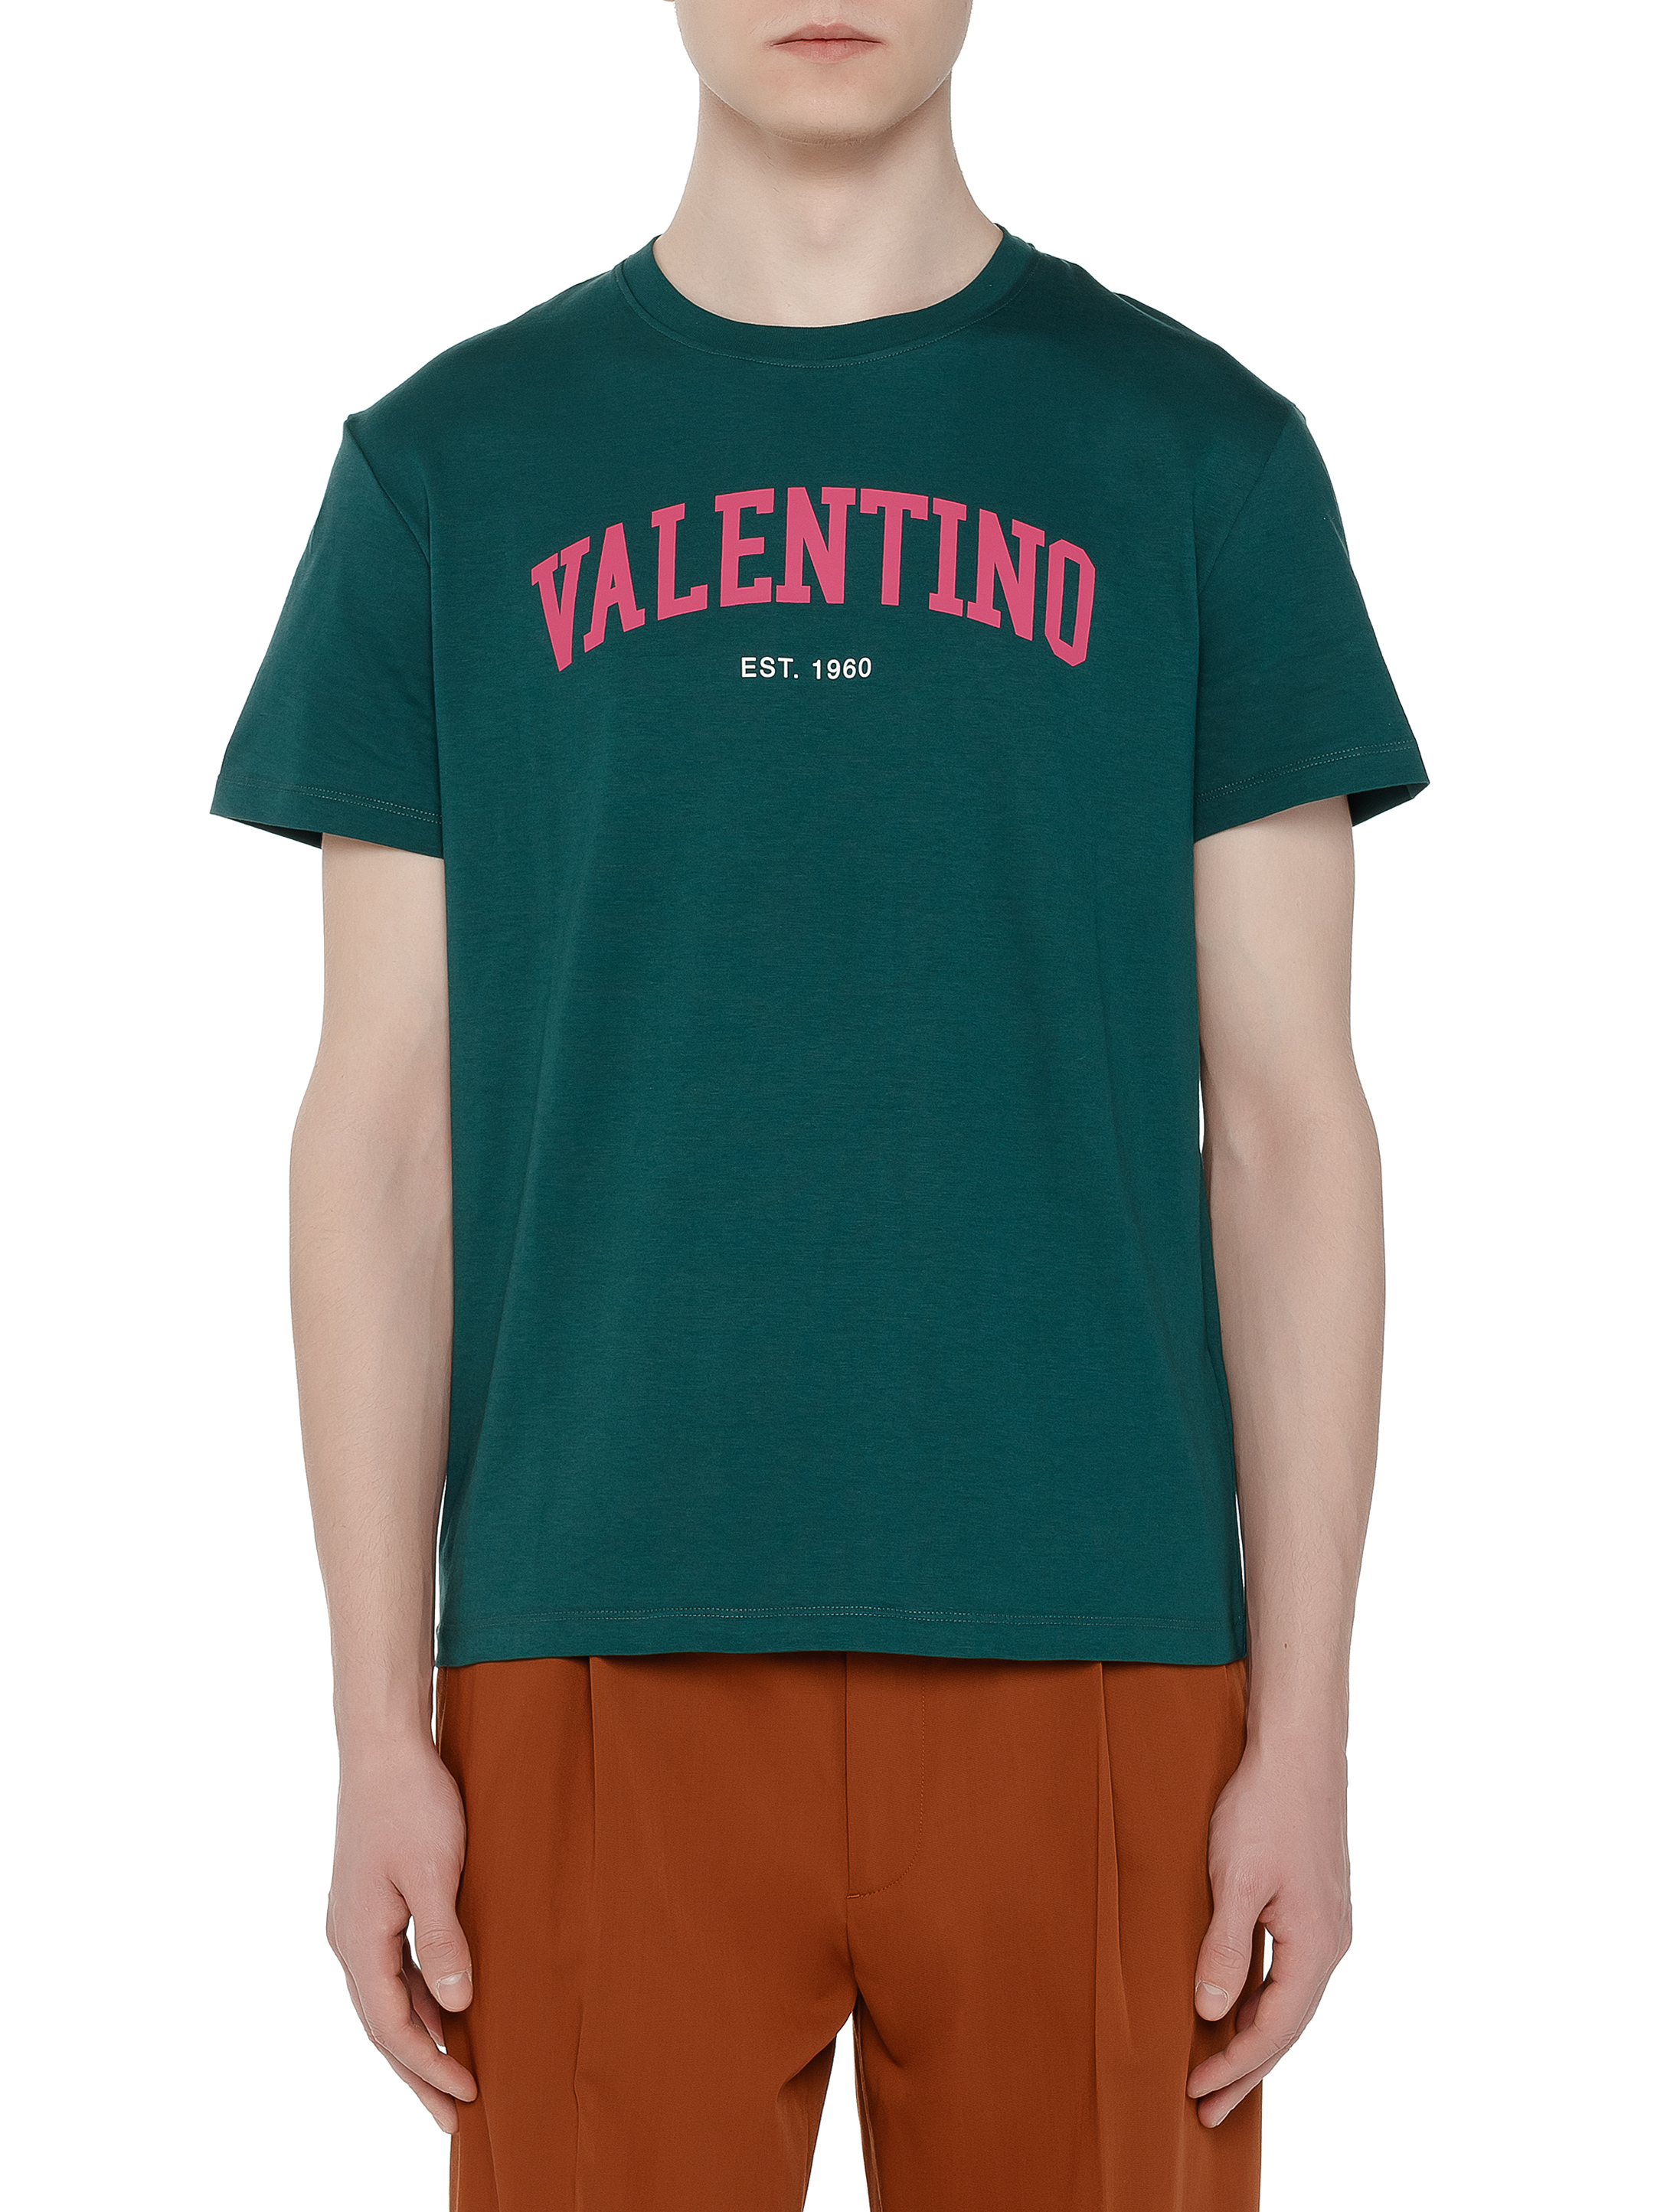 Valentino men's Logo cotton T-shirt - buy 214700 KZT in the official Viled online store, art.